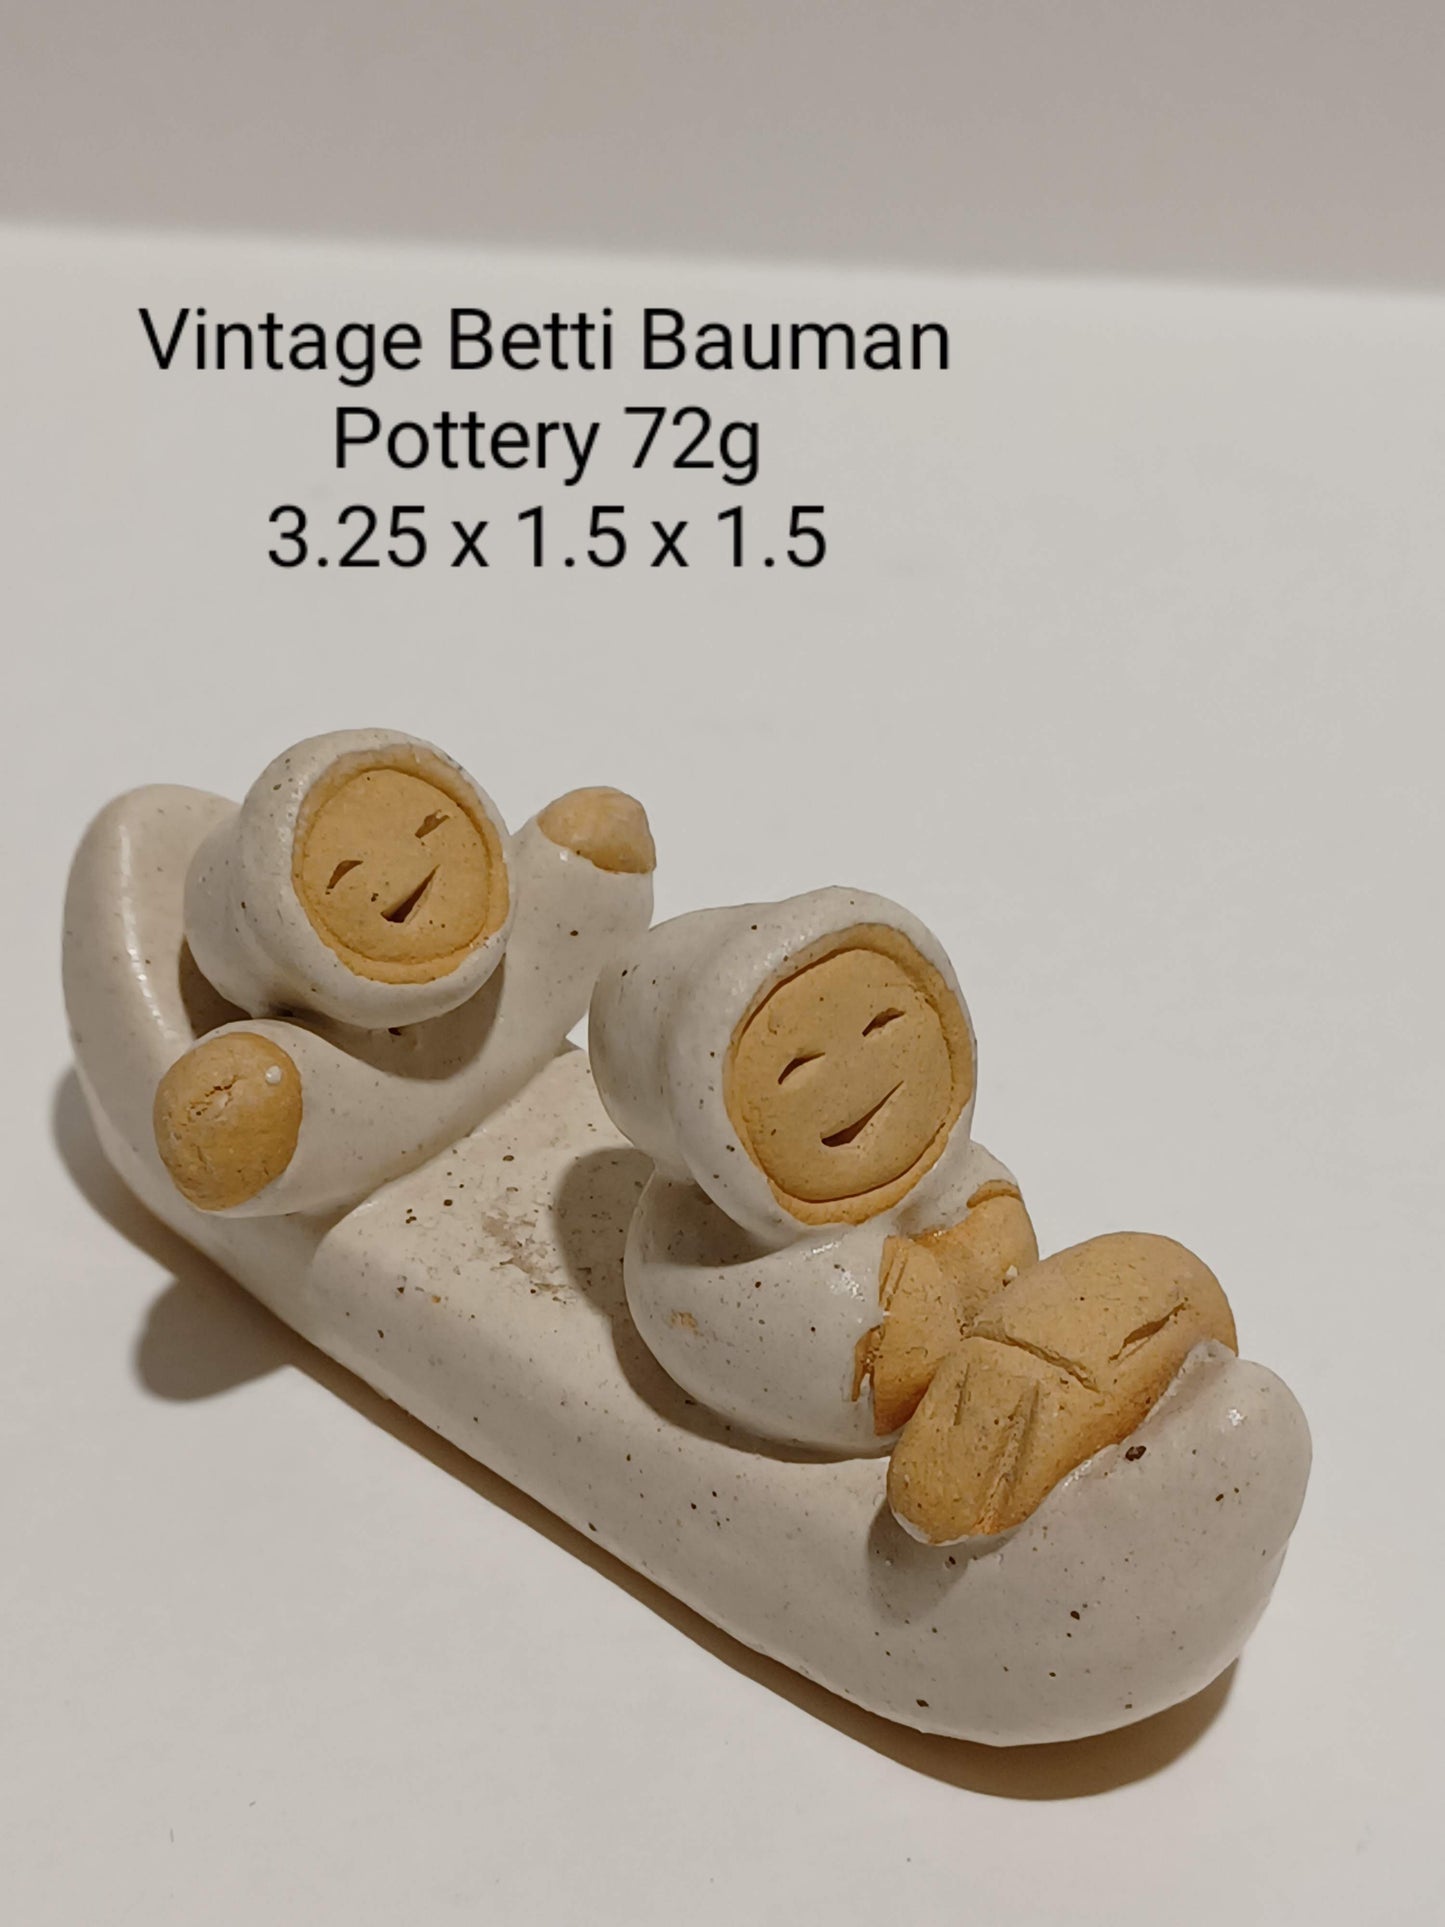 Vintage Betti Bauman Pottery Bowl plus three figurines